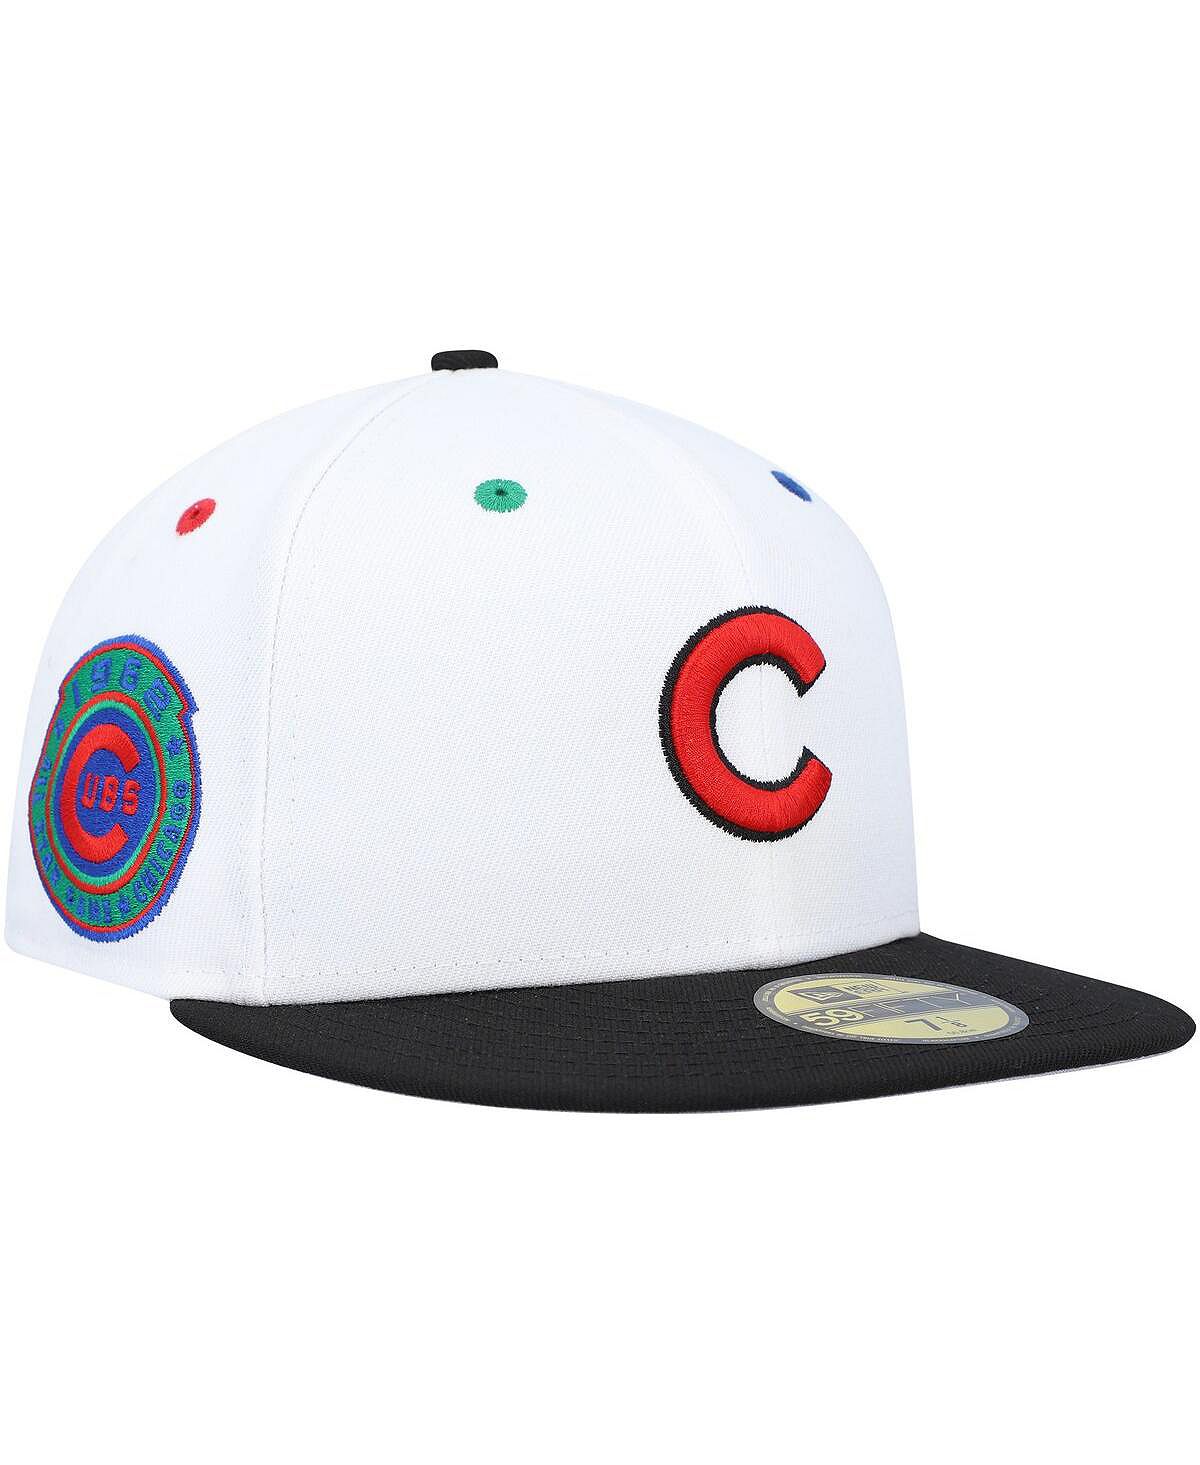 Мужская белая, черная кепка Primary Eye 59FIFTY для Матча всех звезд MLB 1962 Chicago Cubs 59FIFTY. New Era